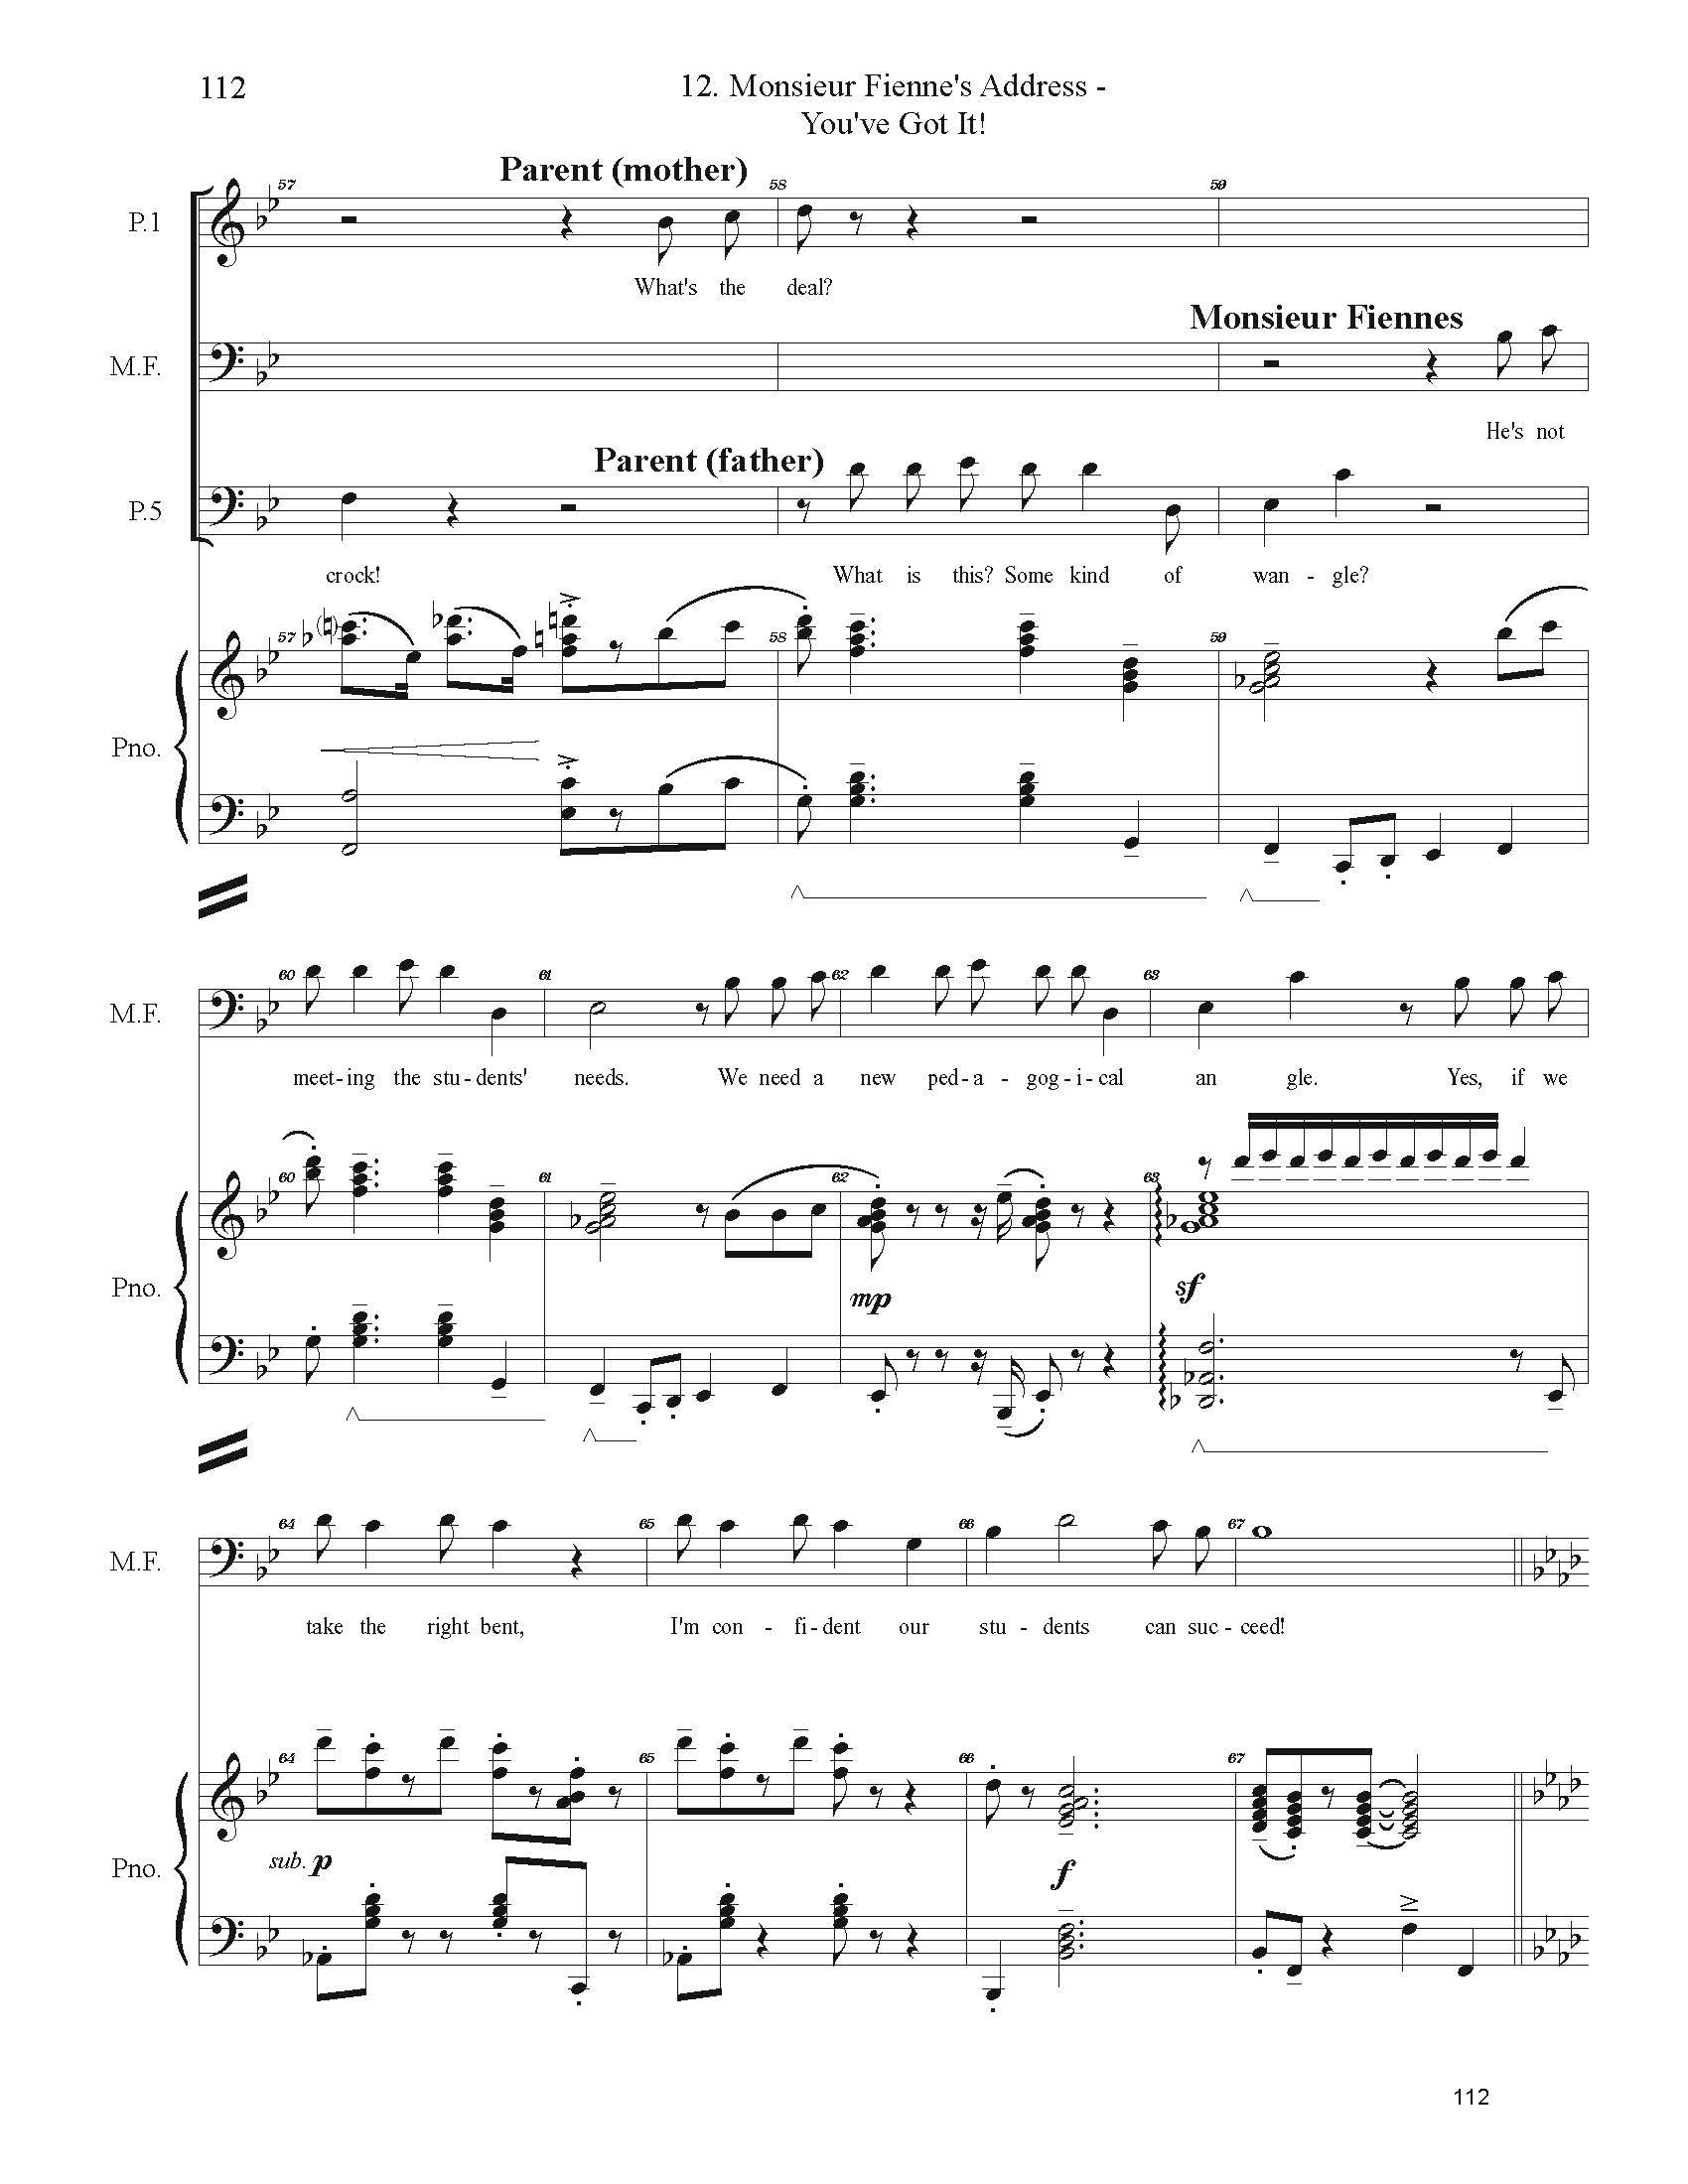 FULL PIANO VOCAL SCORE DRAFT 1 - Score_Page_112.jpg